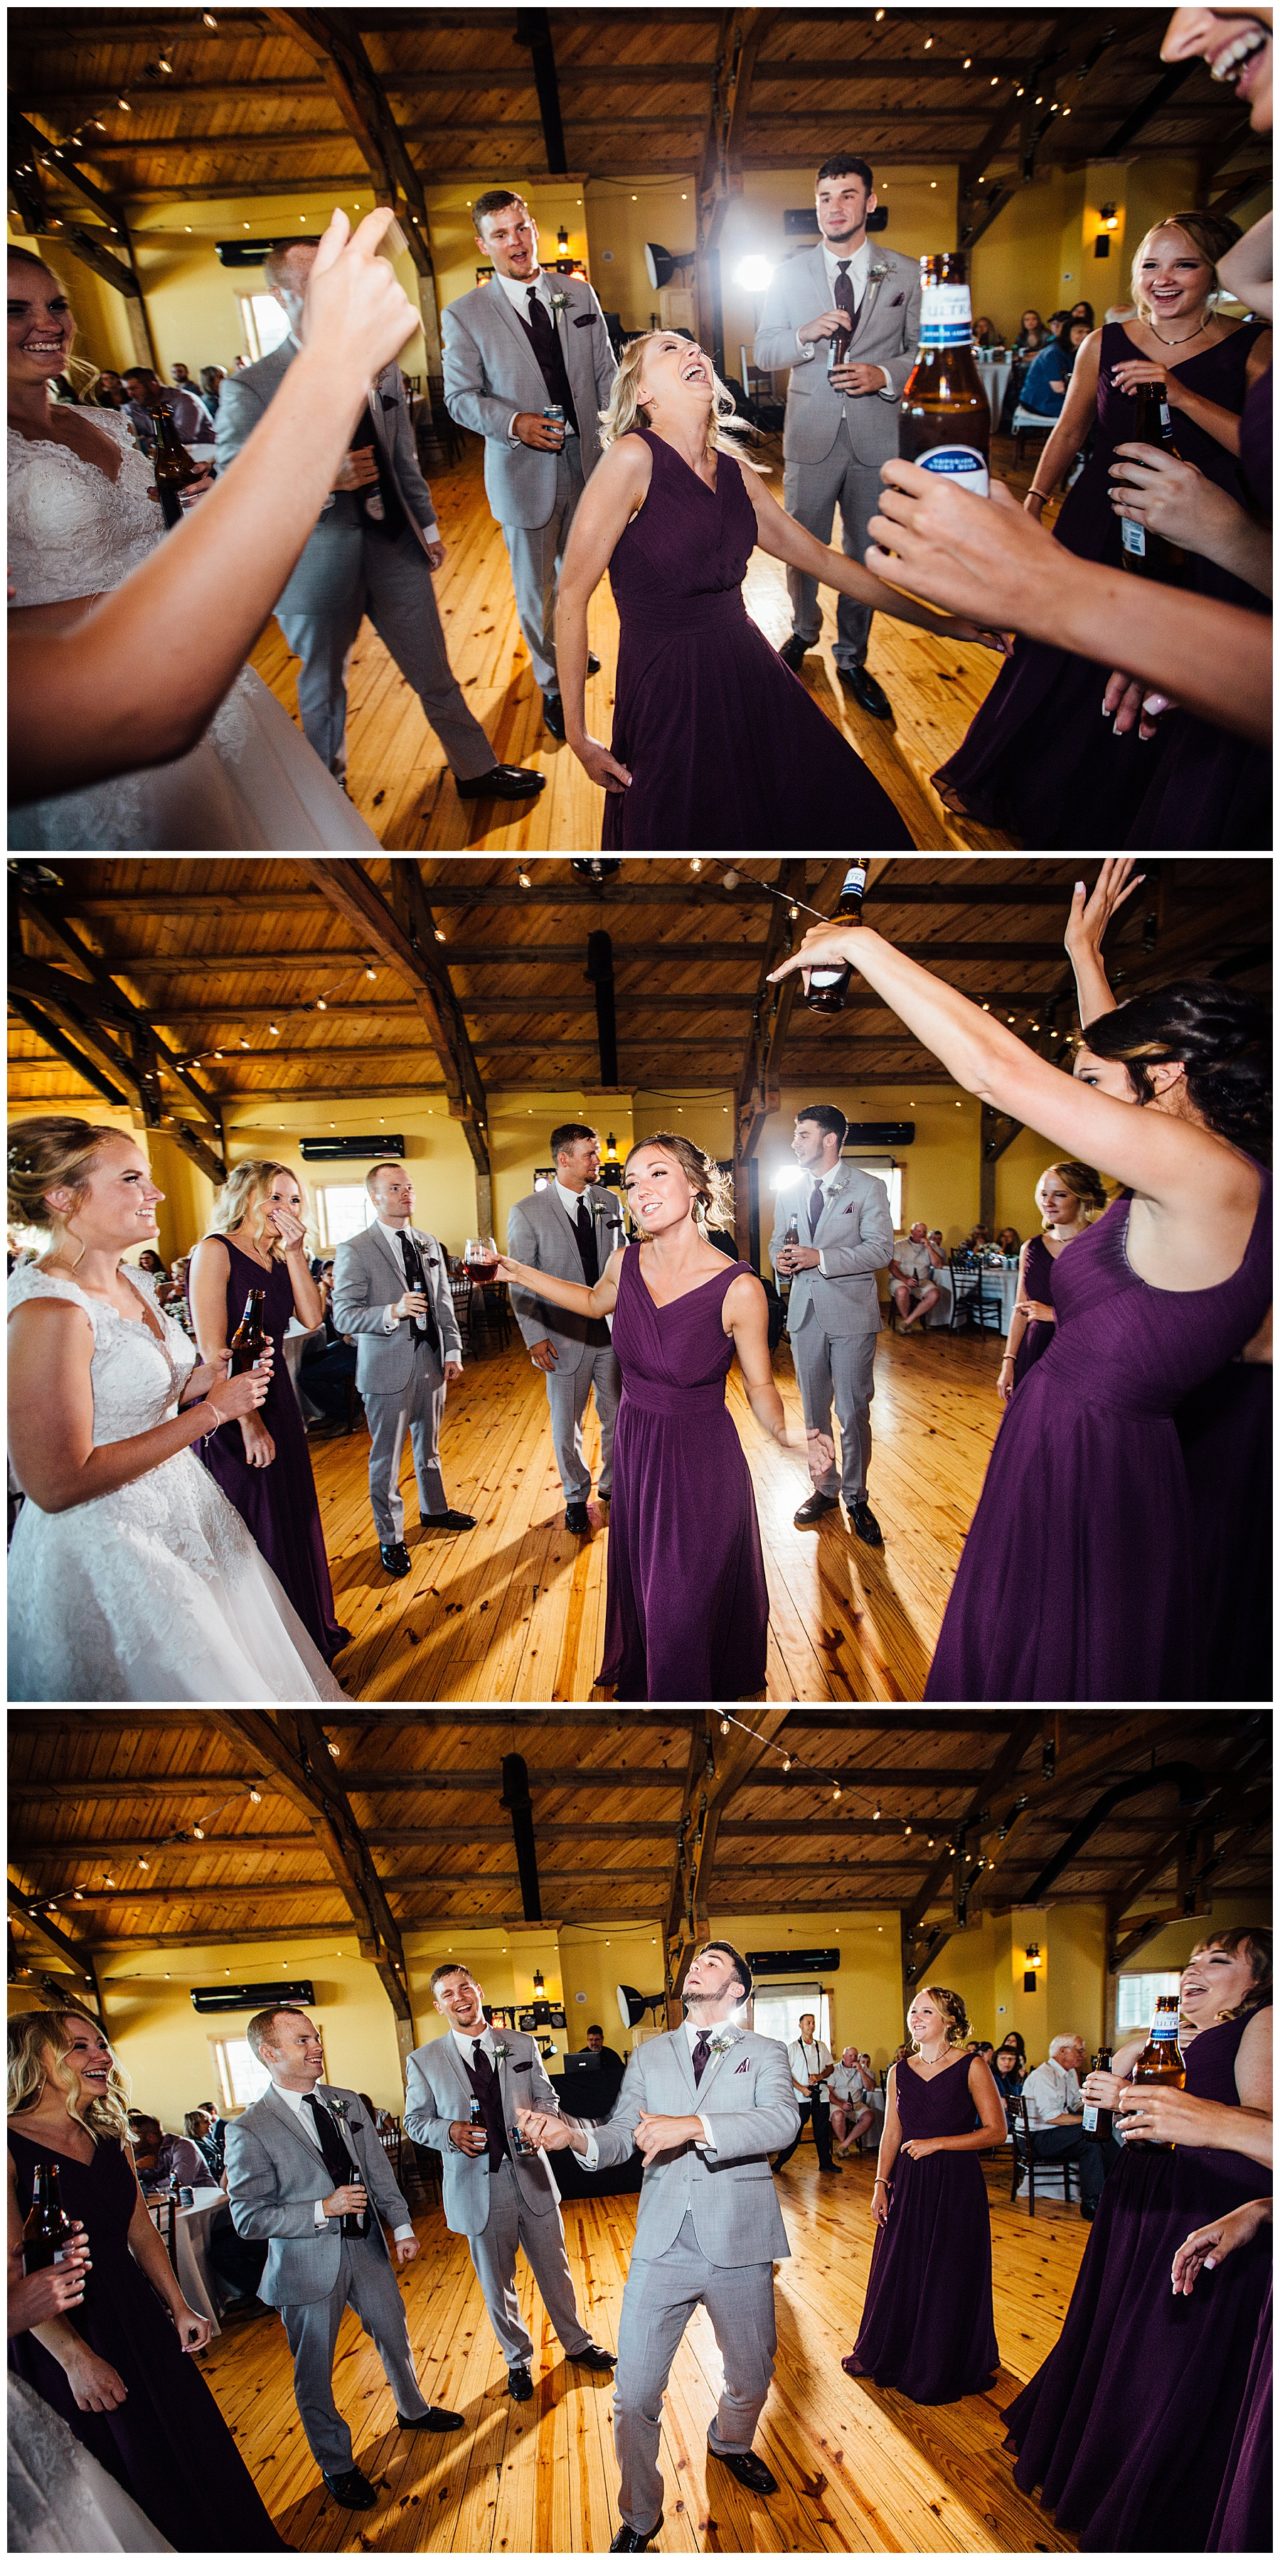 Wedding party dancing